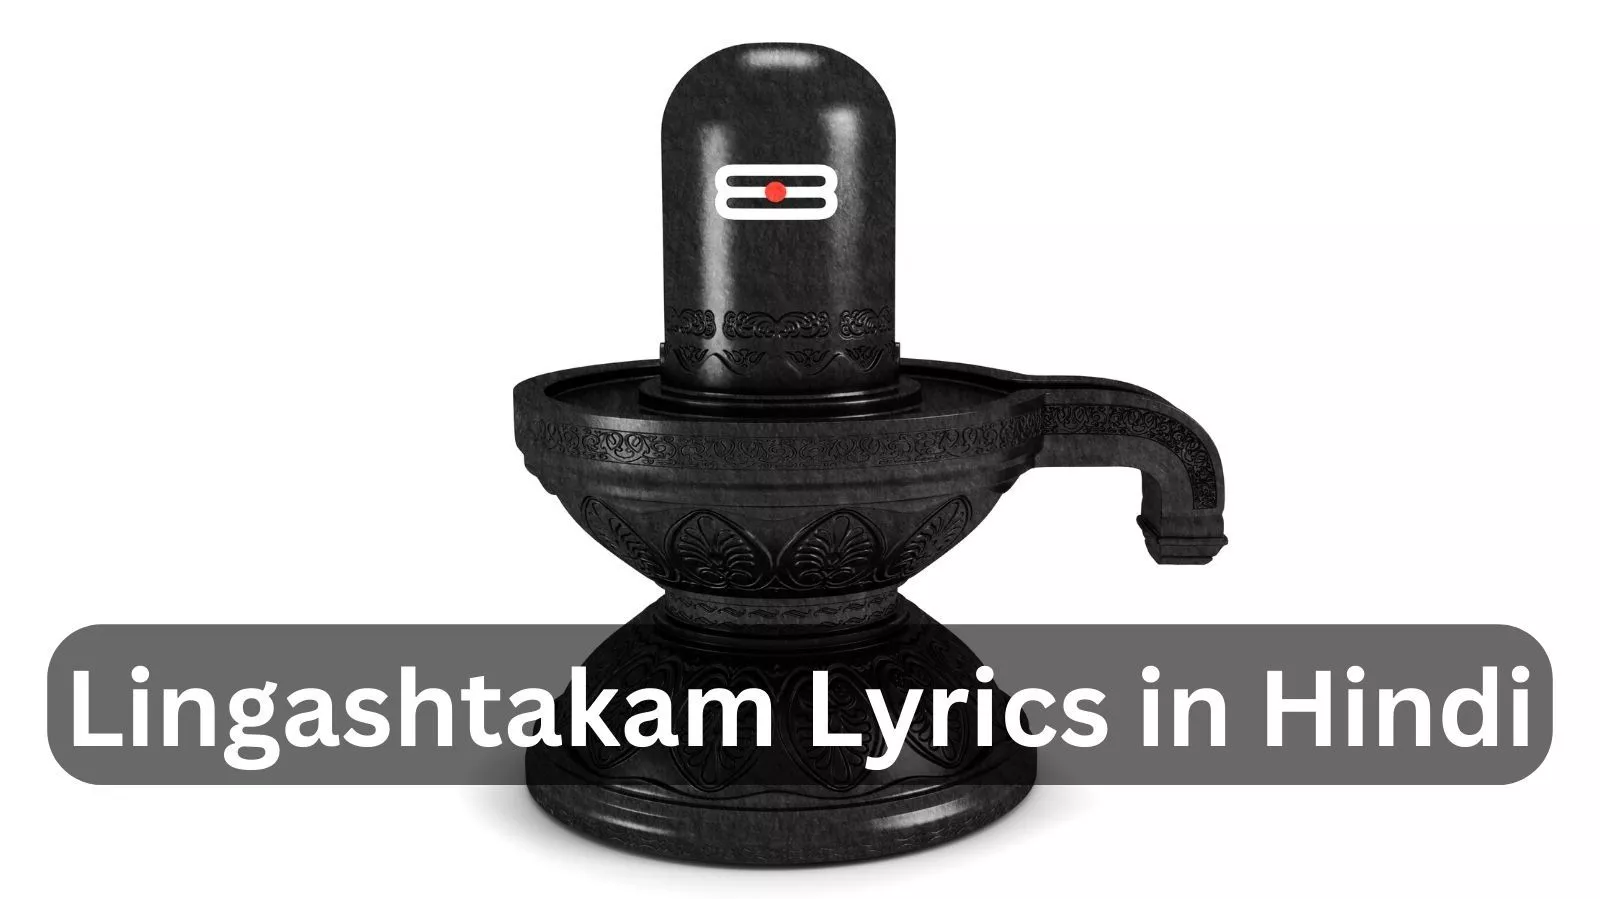 Lingashtakam Lyrics in Hindi